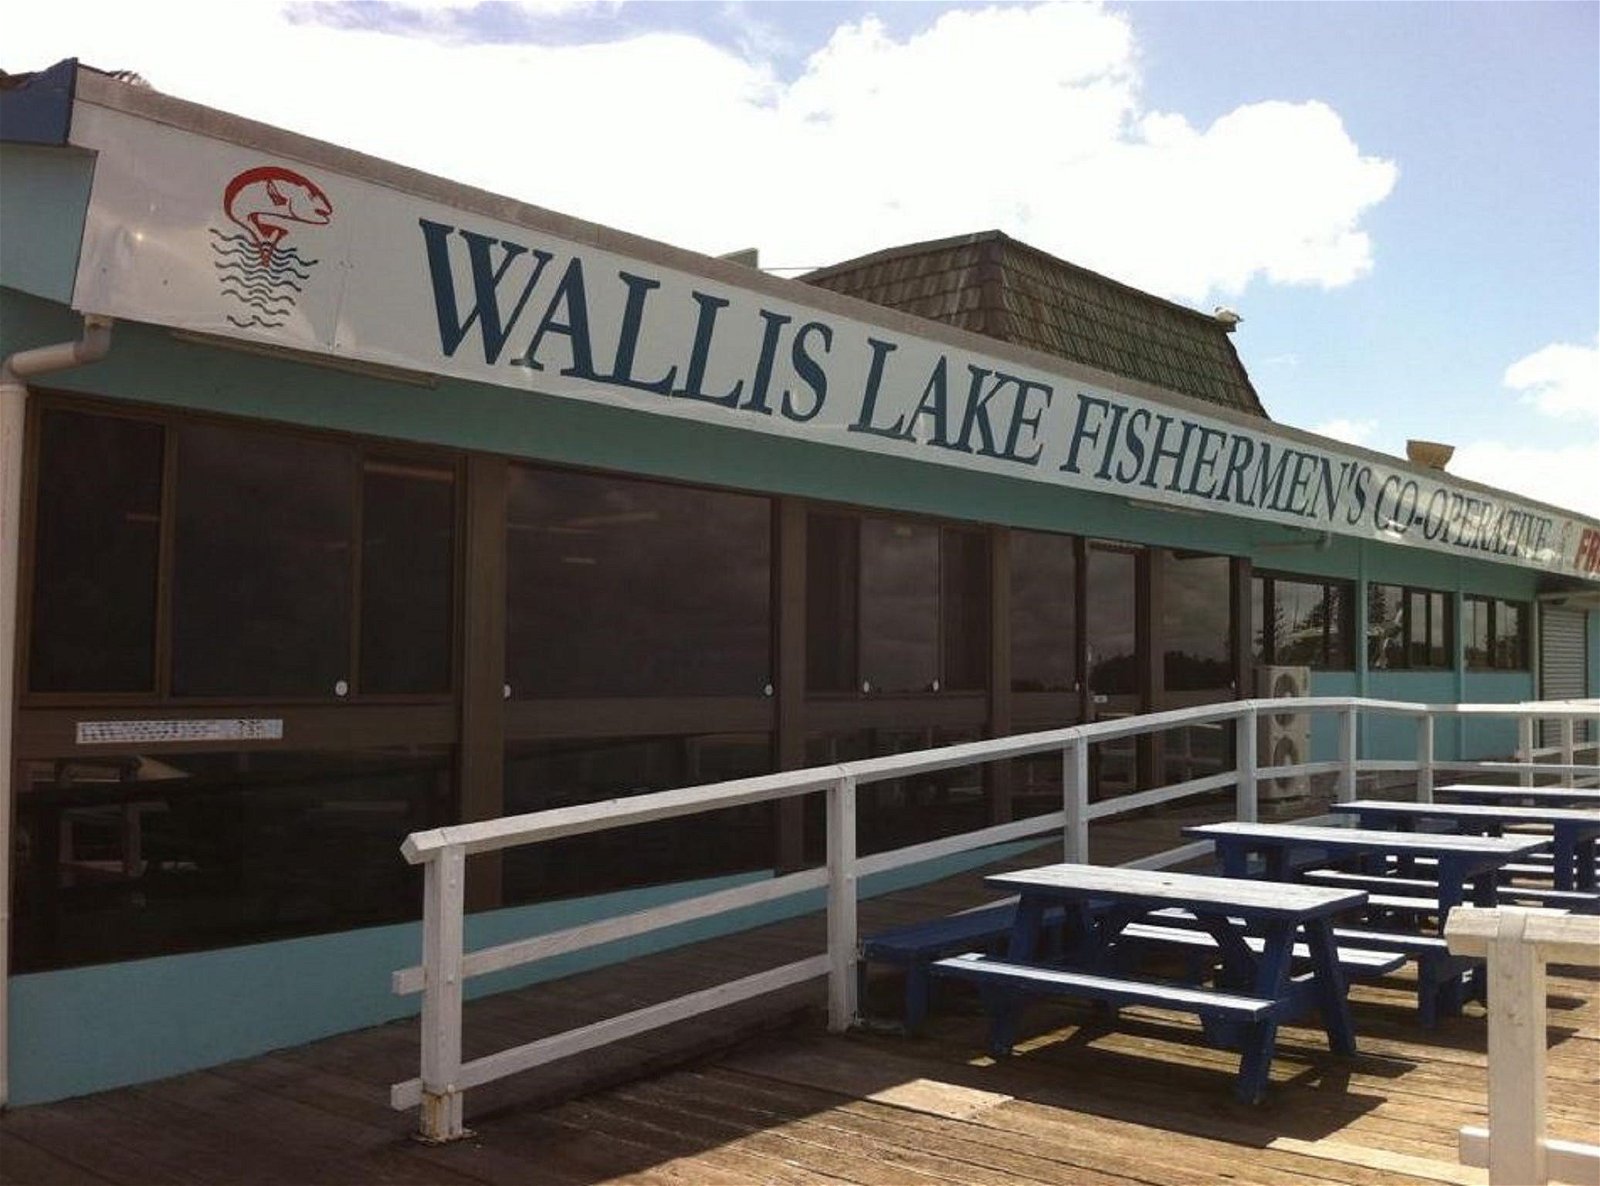 Wallis Lake Fishermans Co-op - Australia Accommodation